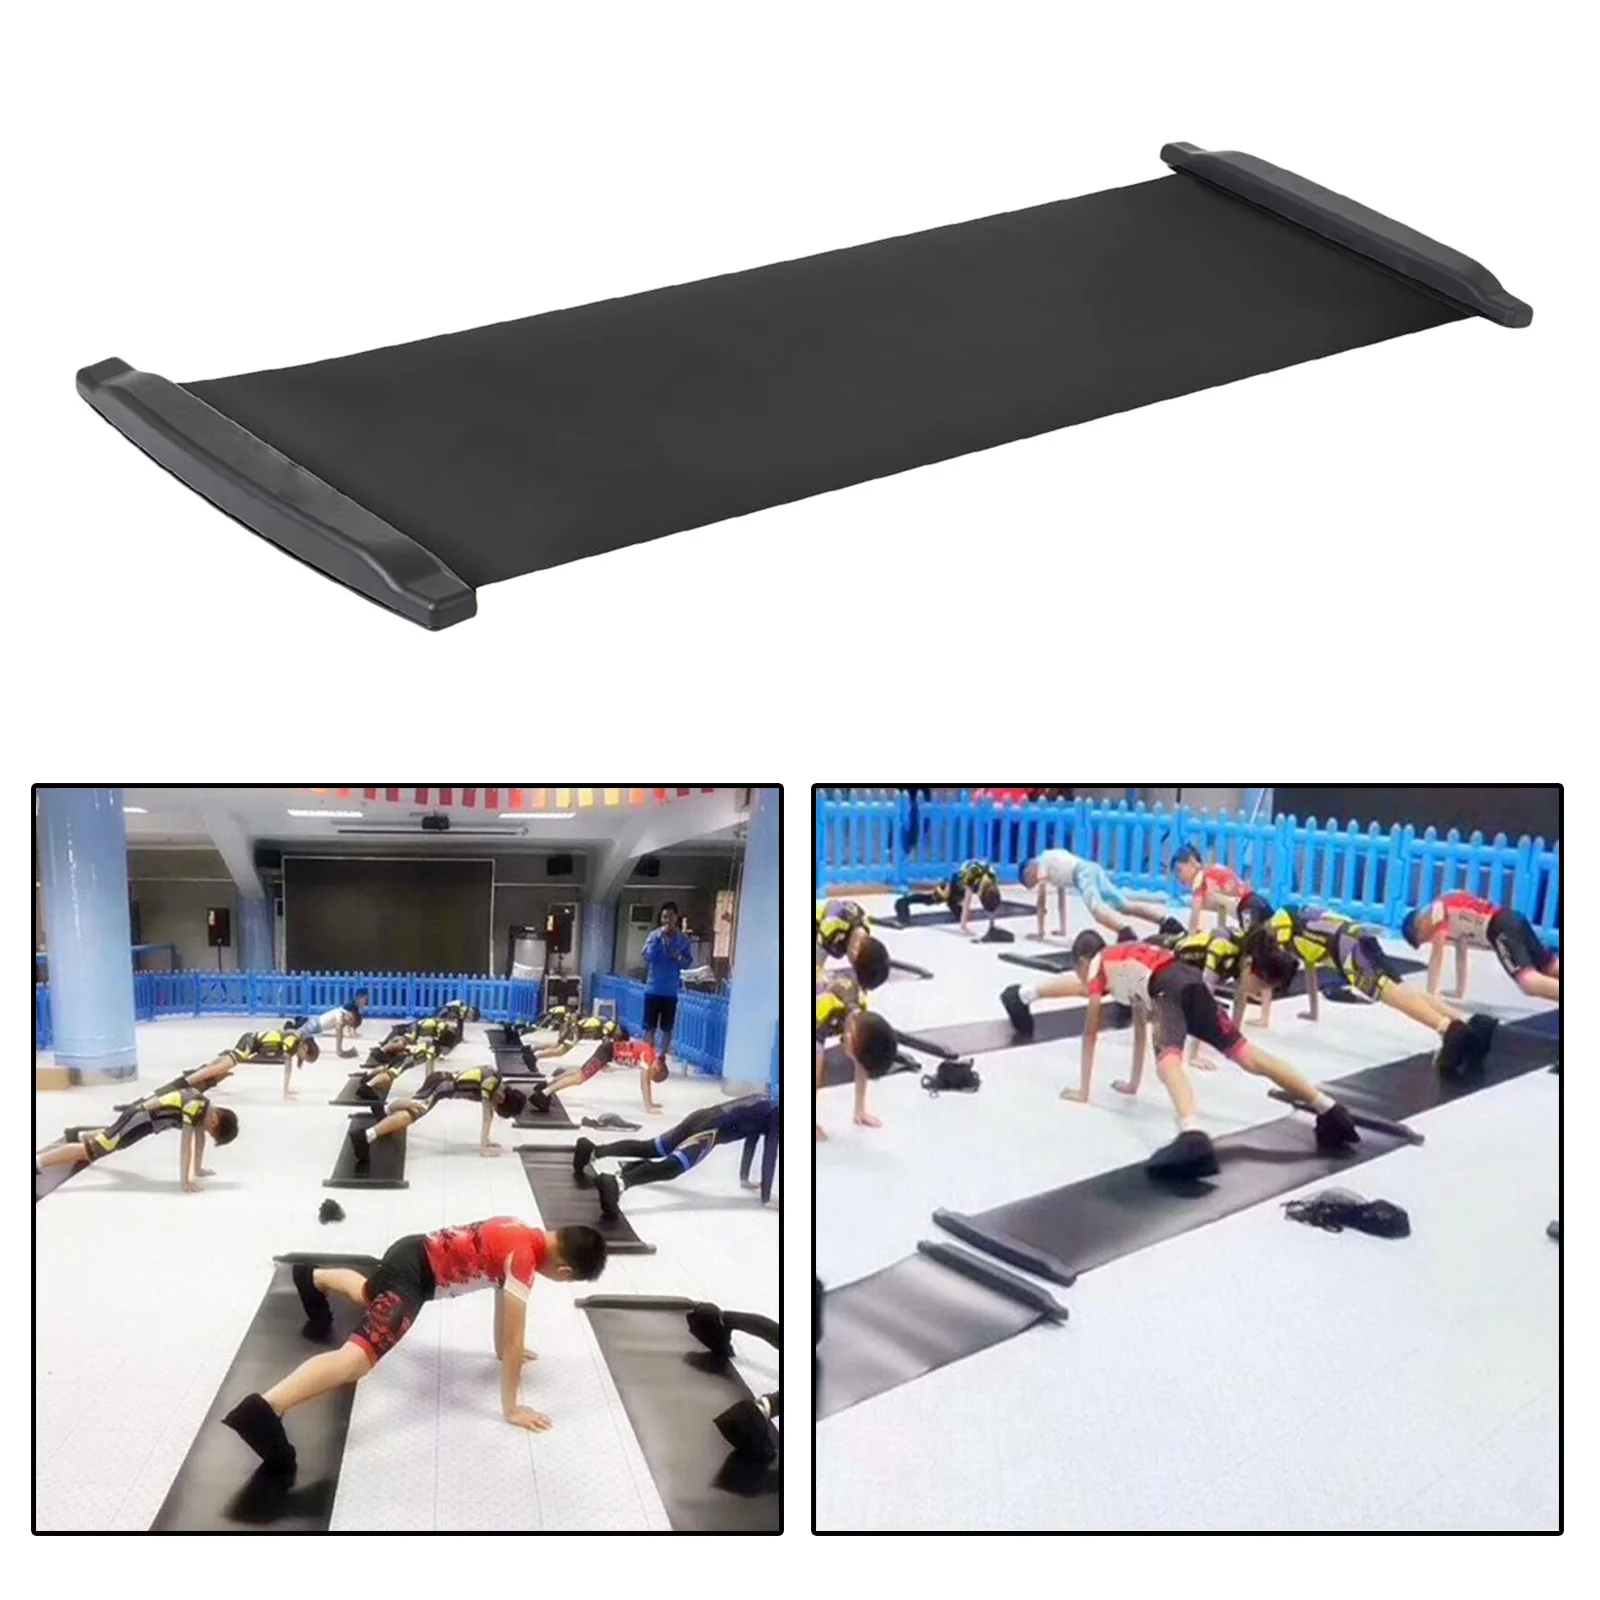 Premium Fitness Slide Board Sliding Mat Pad w/End Stops Skating Hockey Balance Training Mat Pad for Kids Adults Skate Training